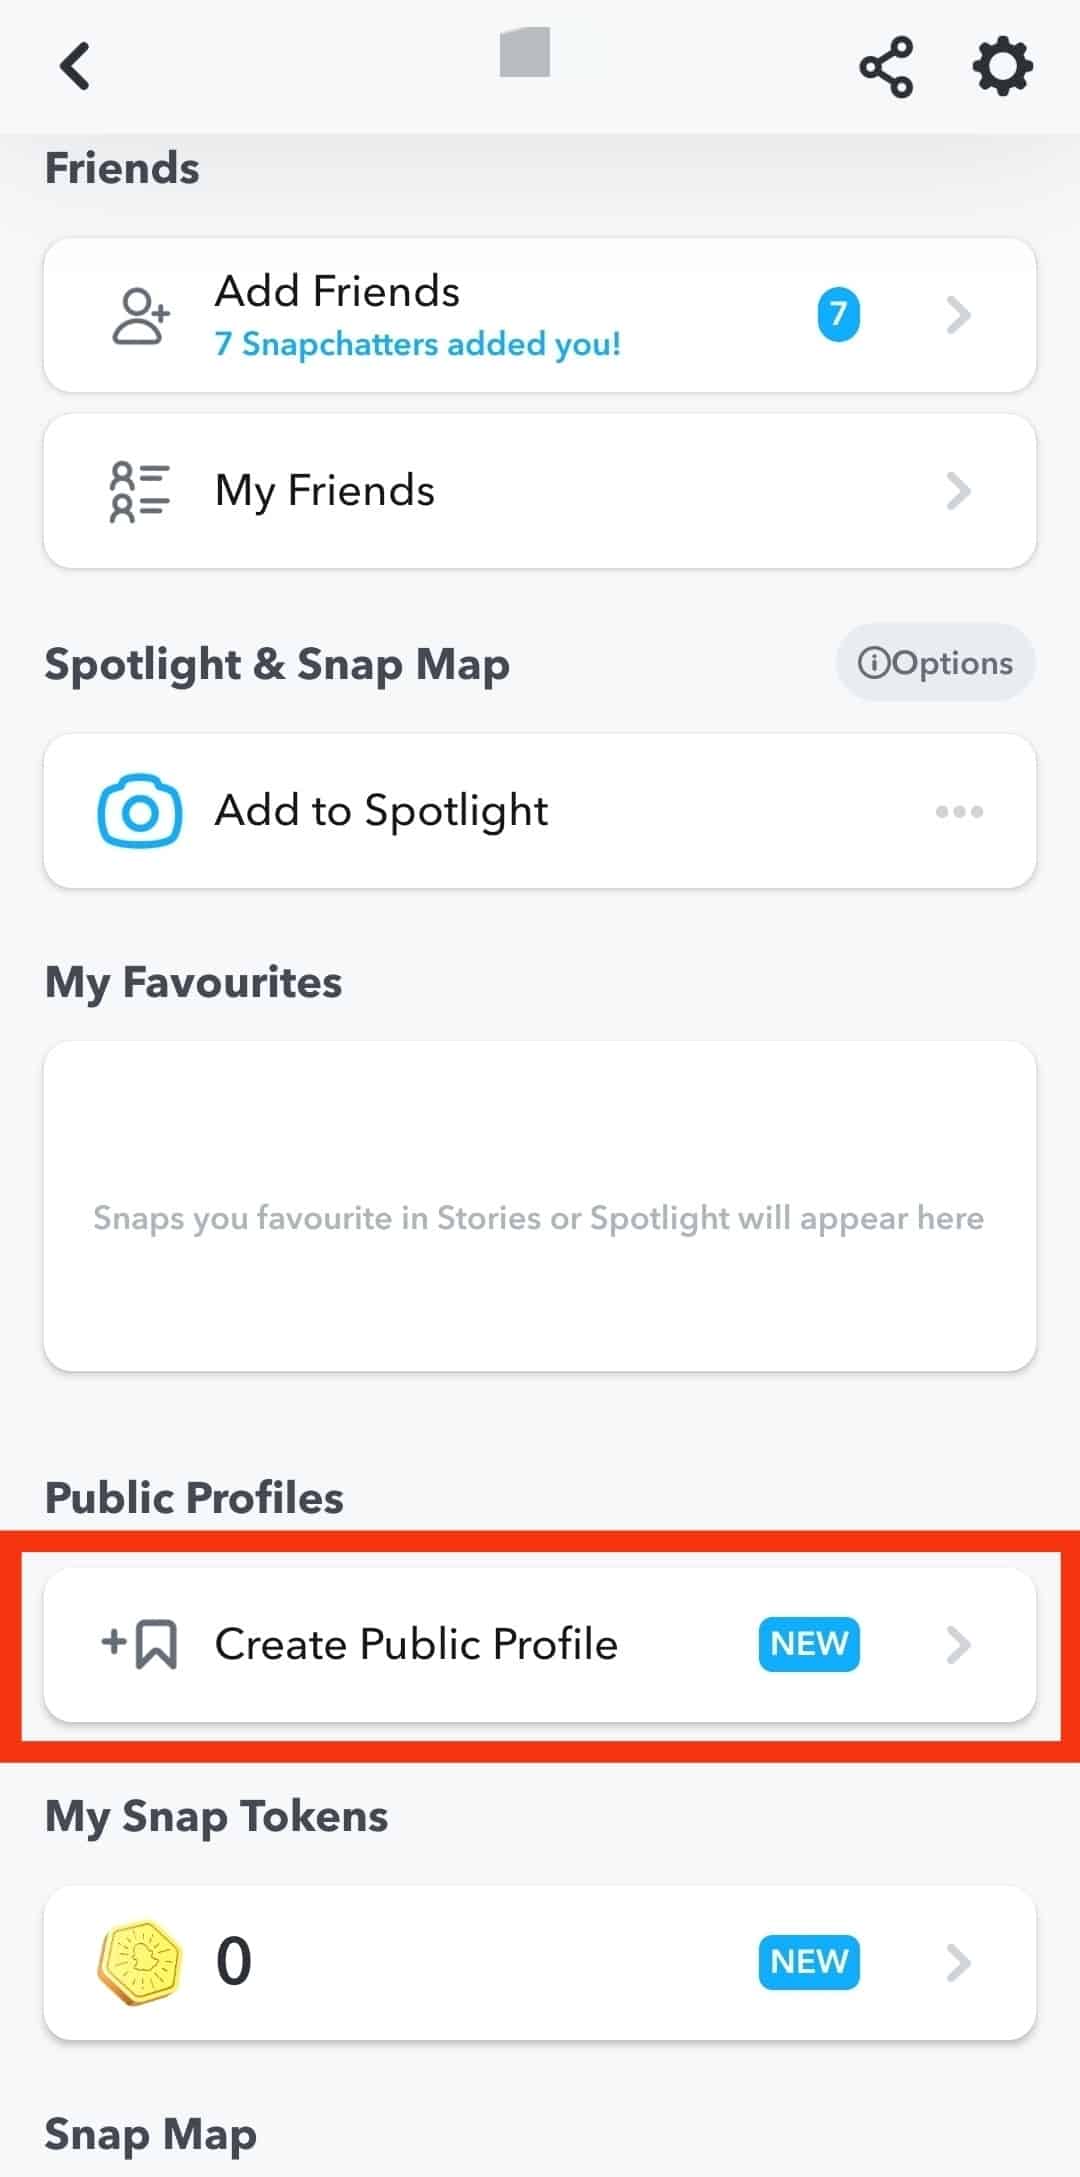 Select Create Public Profile